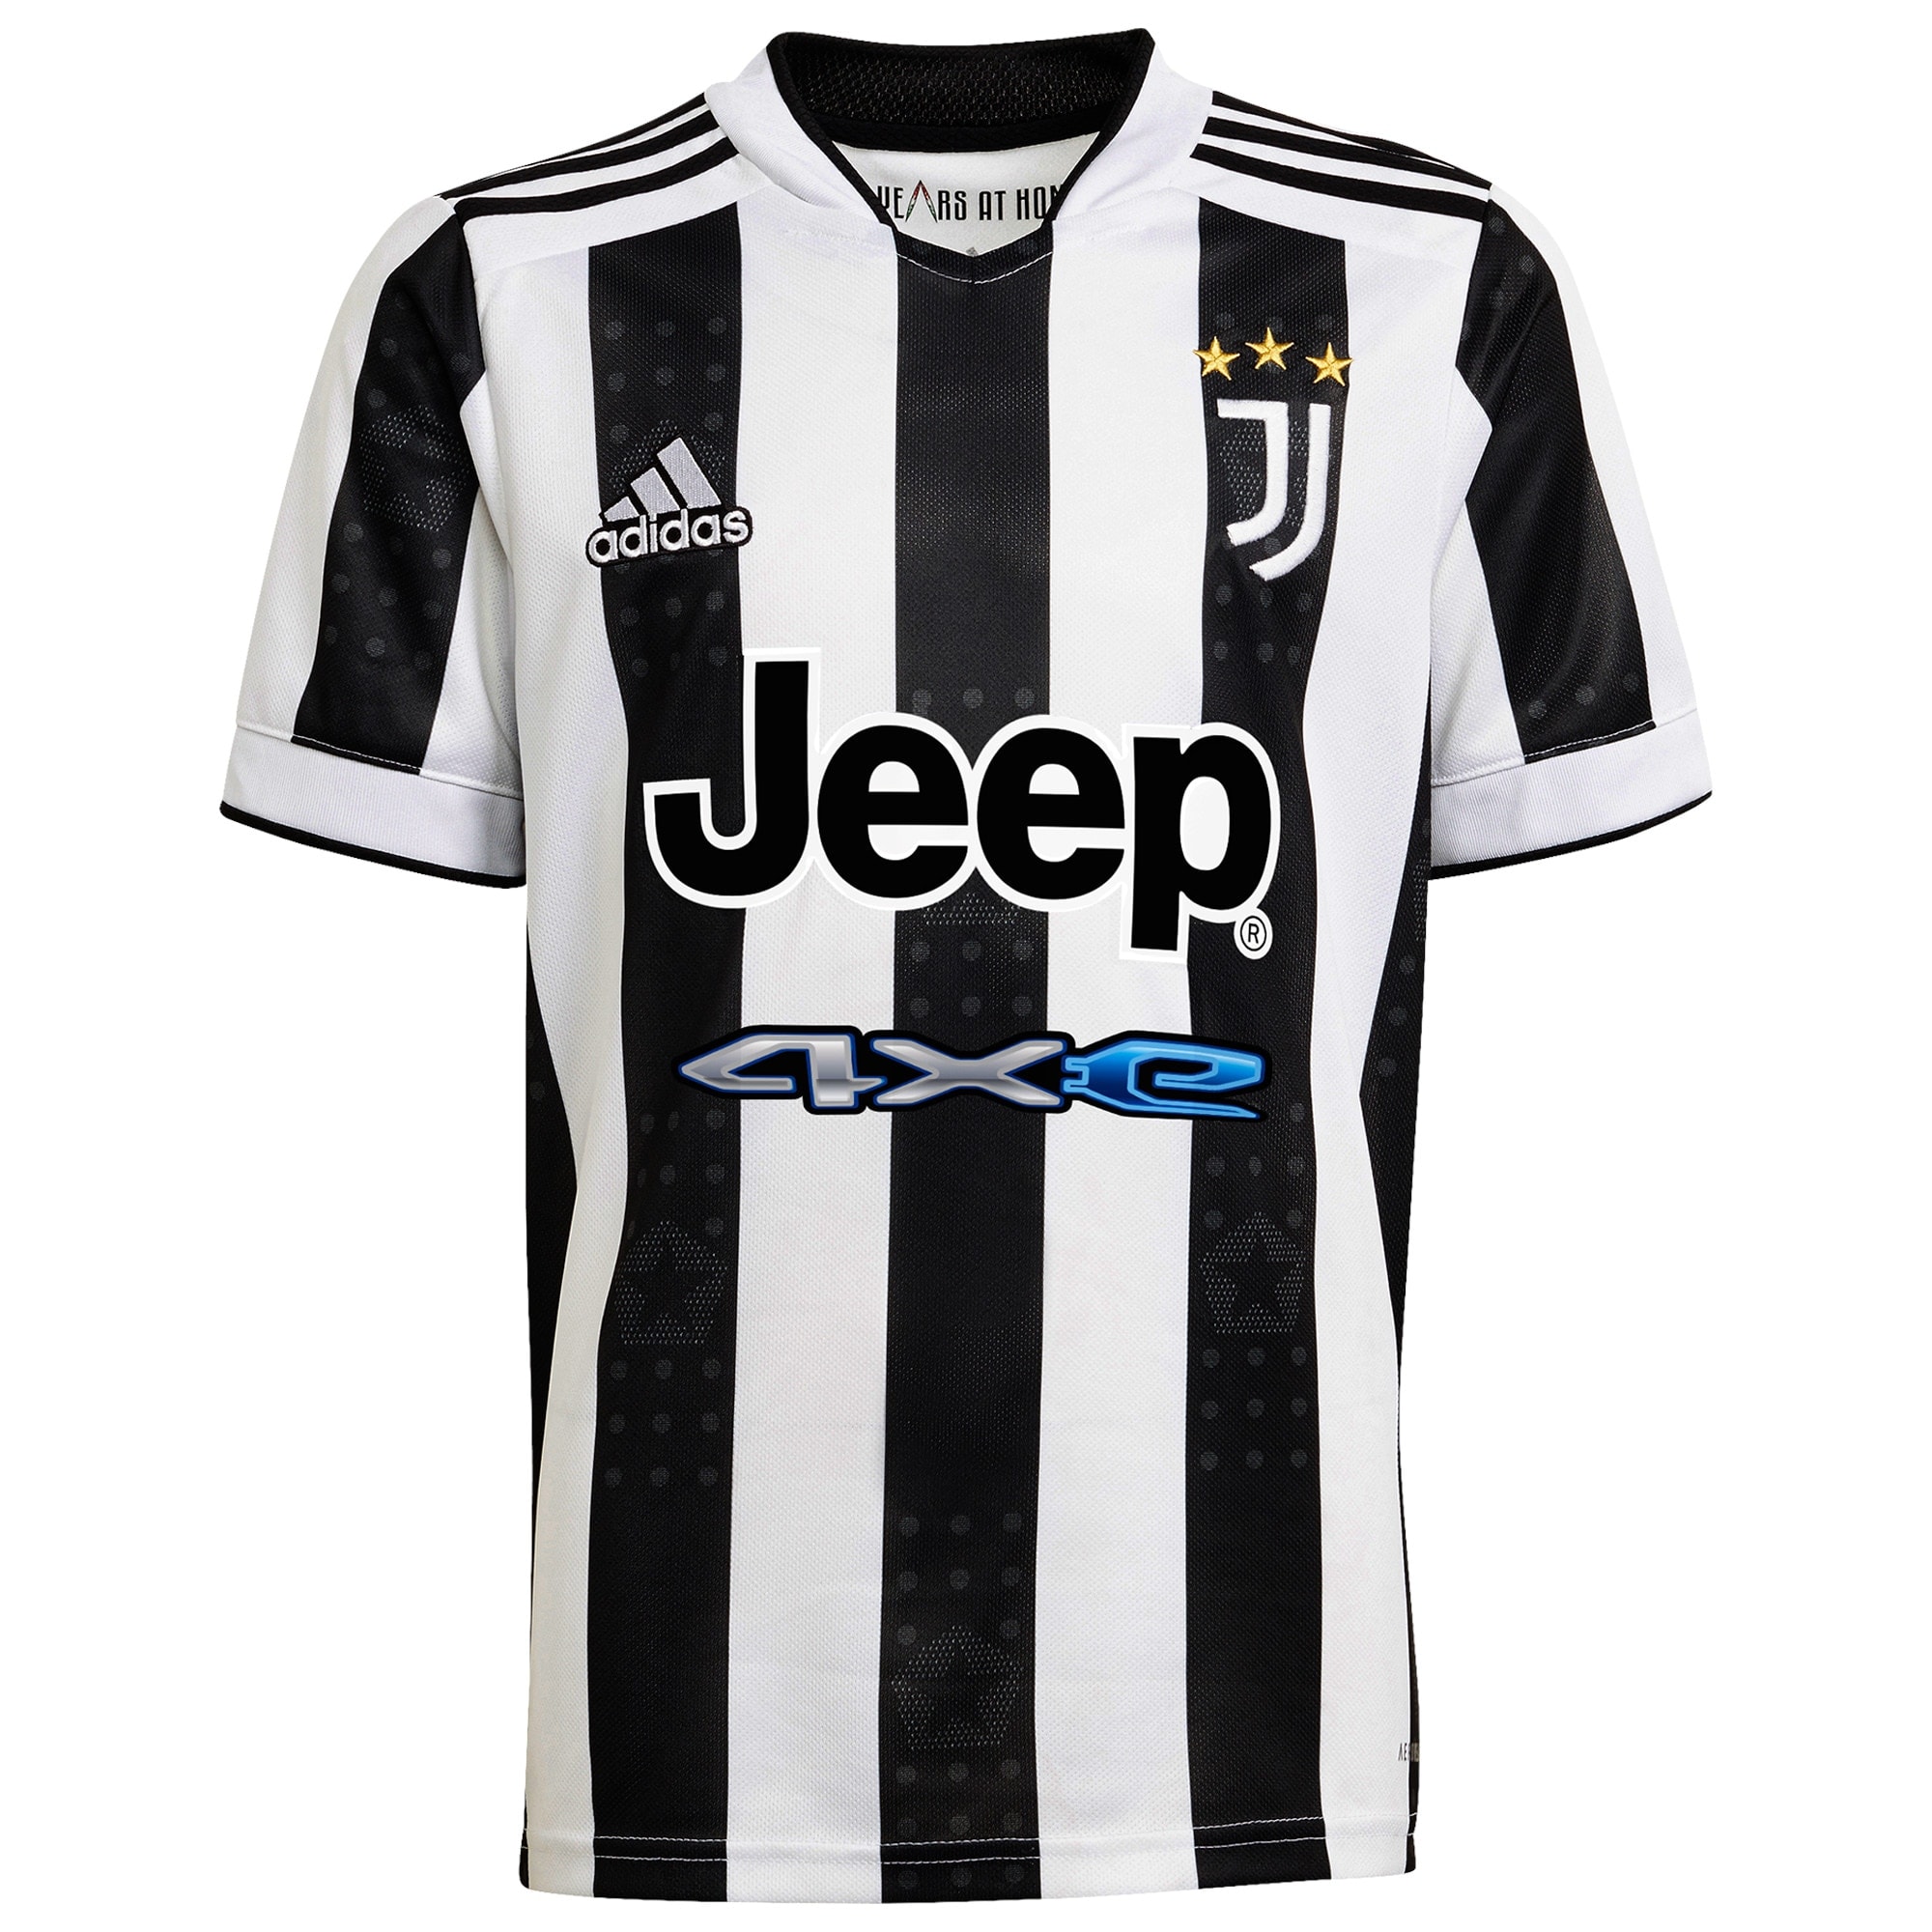 Juventus Home Shirt 2021-22 with Morata 9 printing